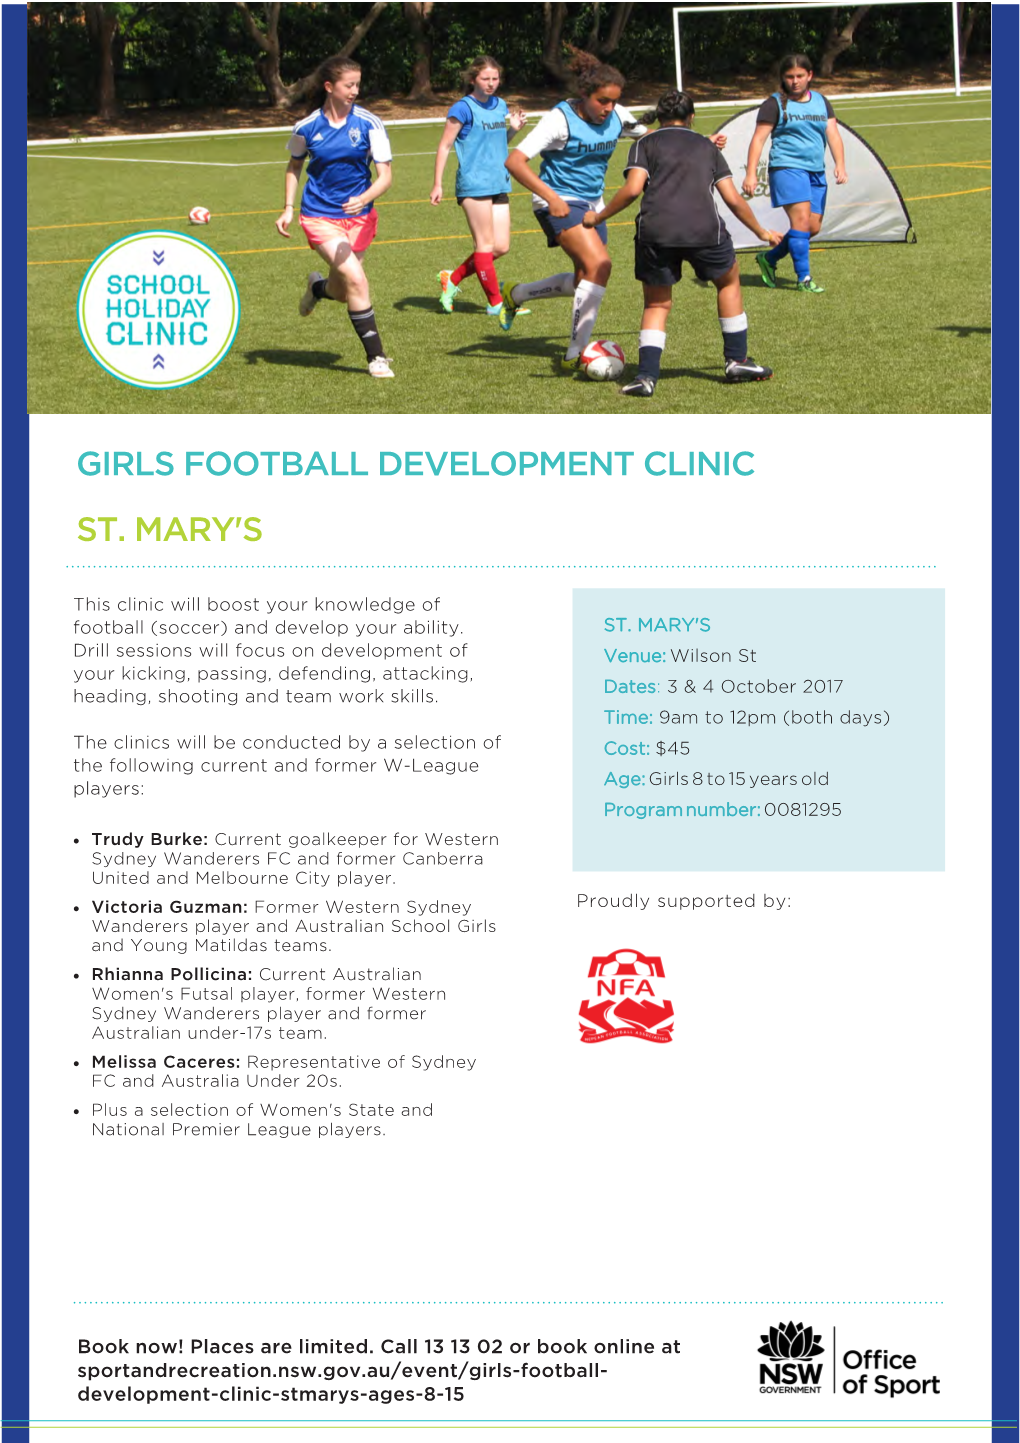 St. Mary's Girls Football Development Clinic